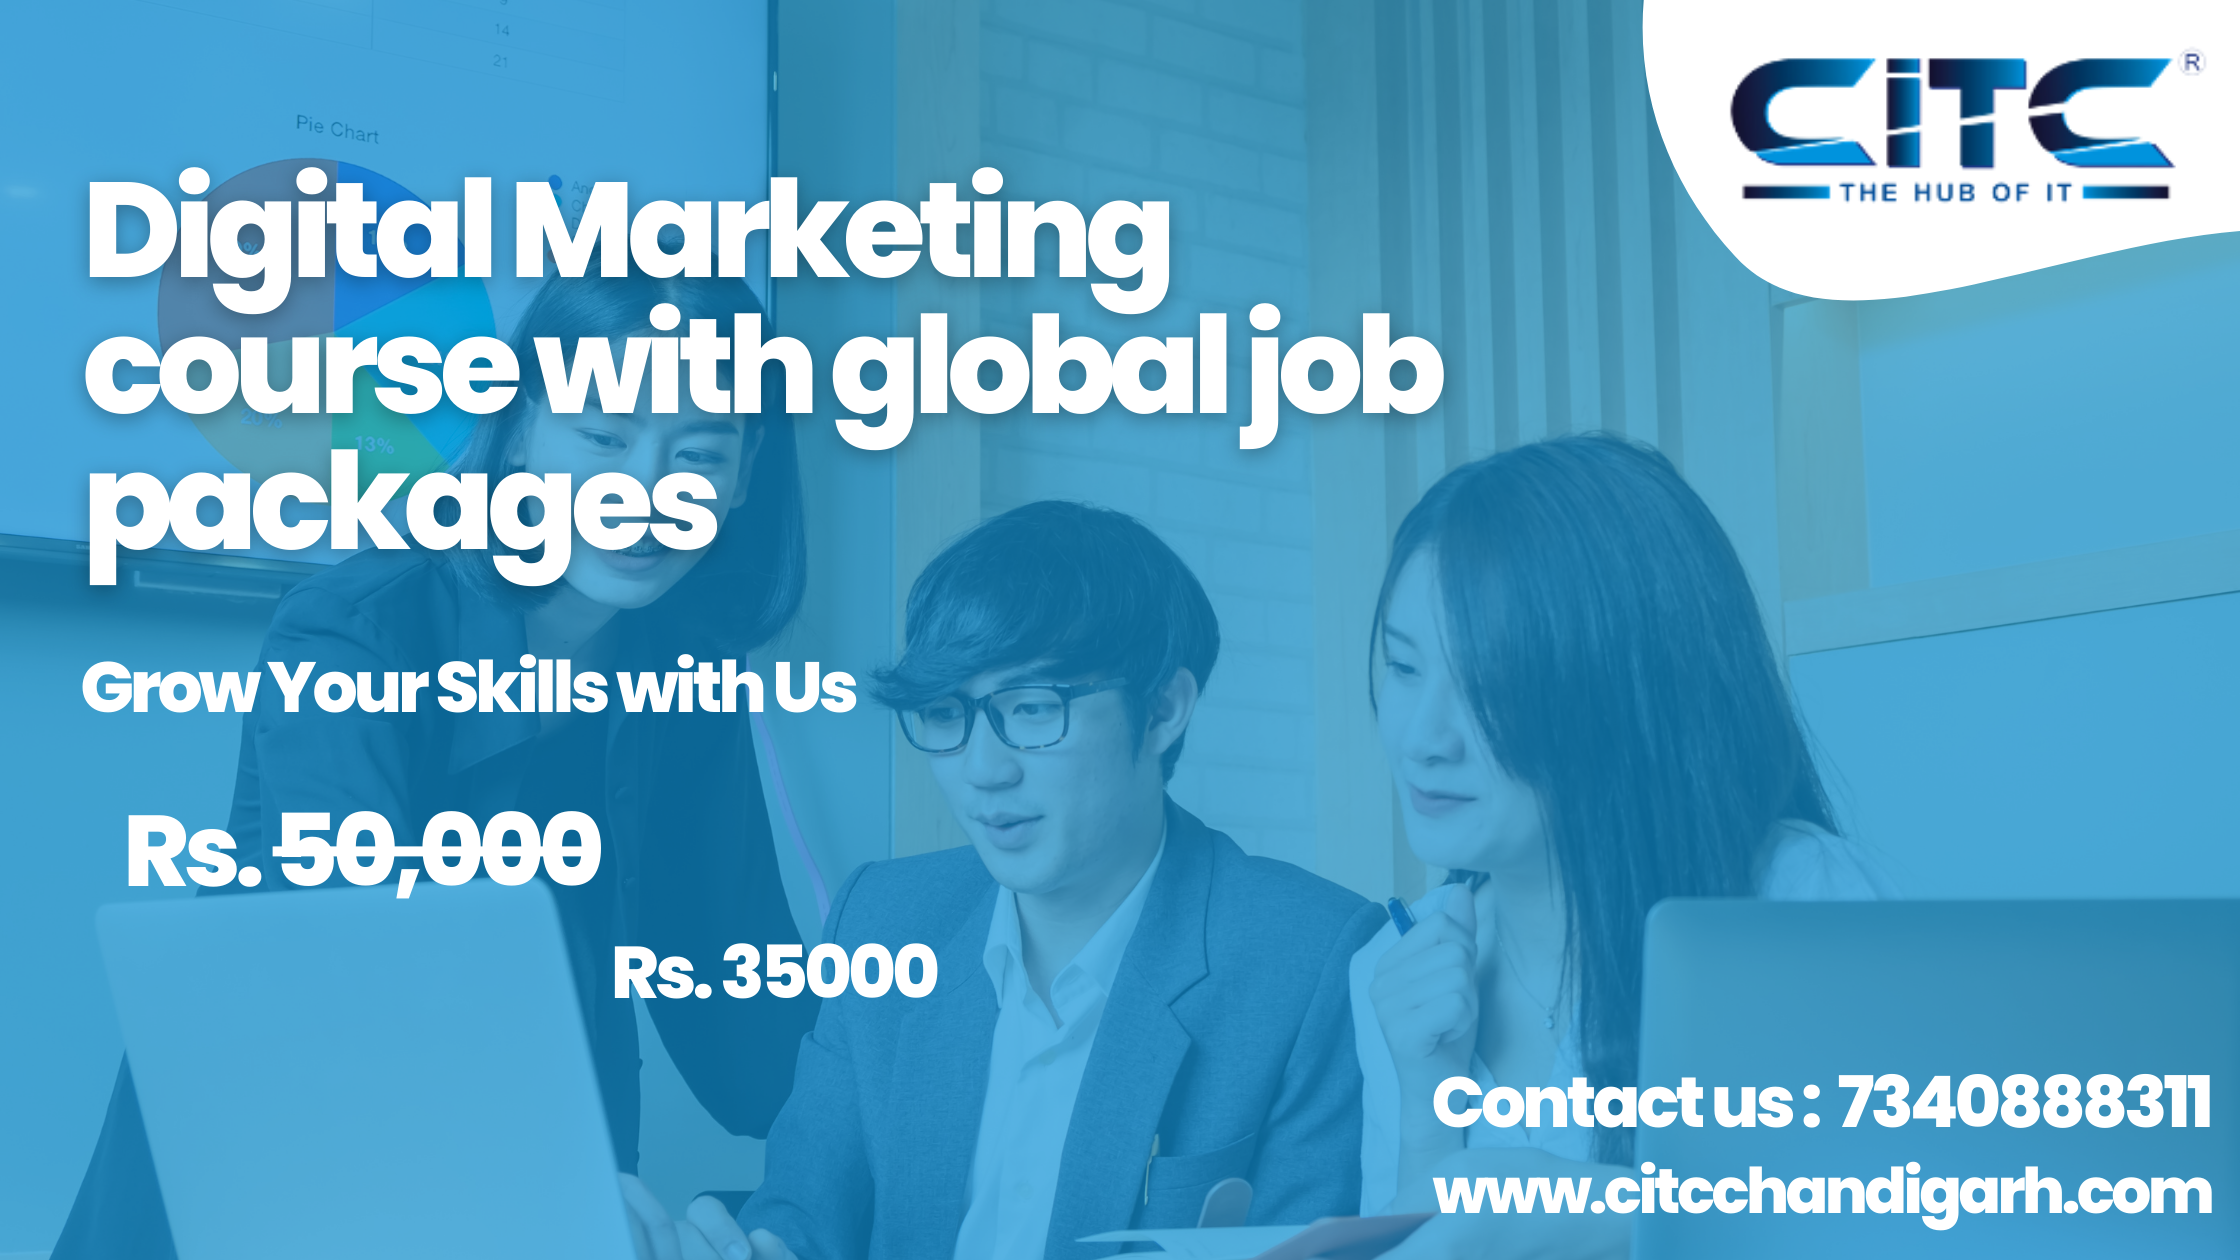 CITC- The Hub of IT: Global Digital Marketing Course & Jobs